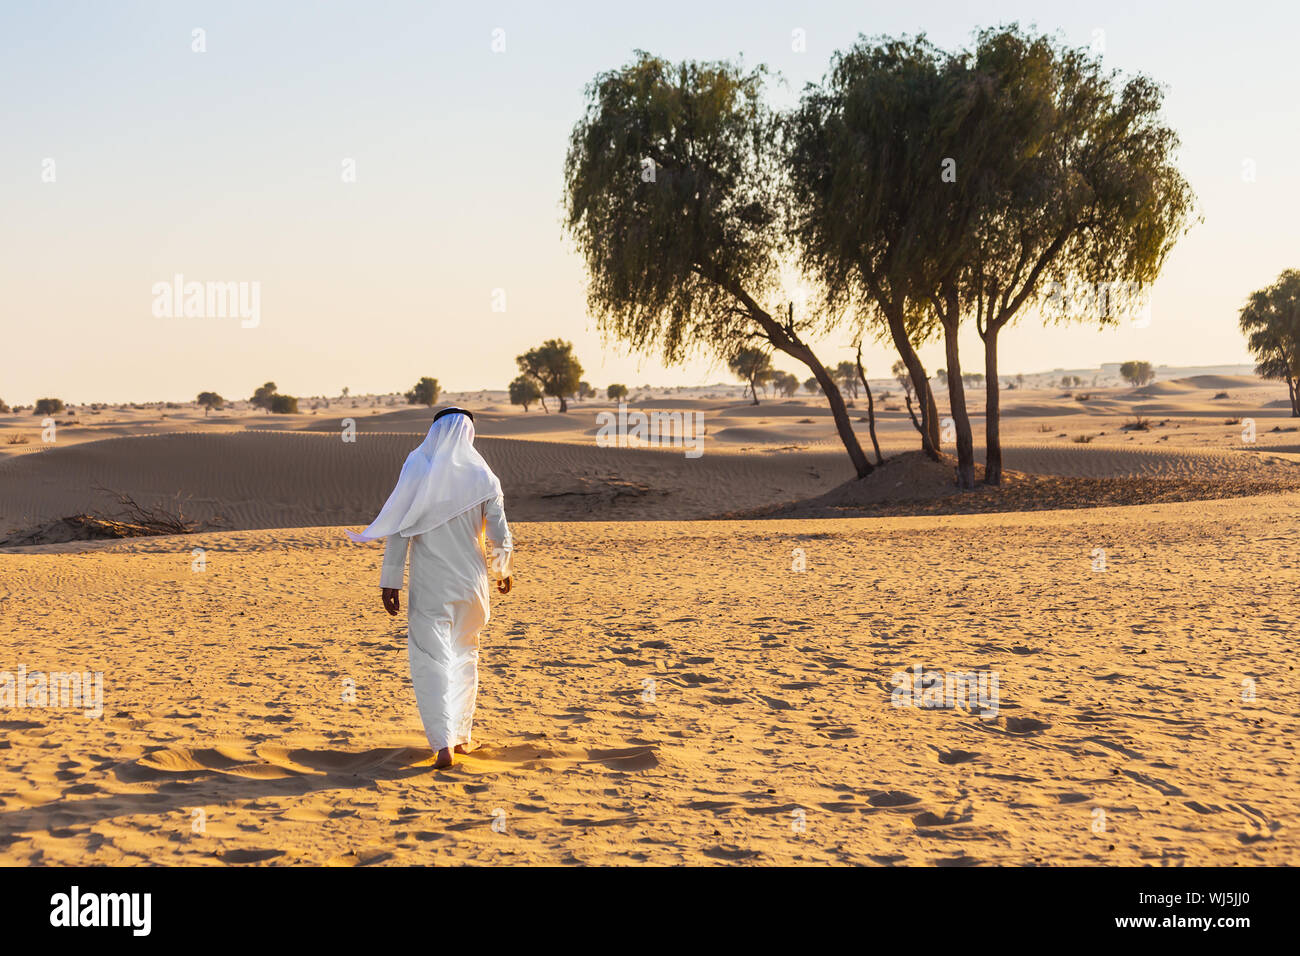 Arab in the Arabian desert on a hot sunny day Stock Photo